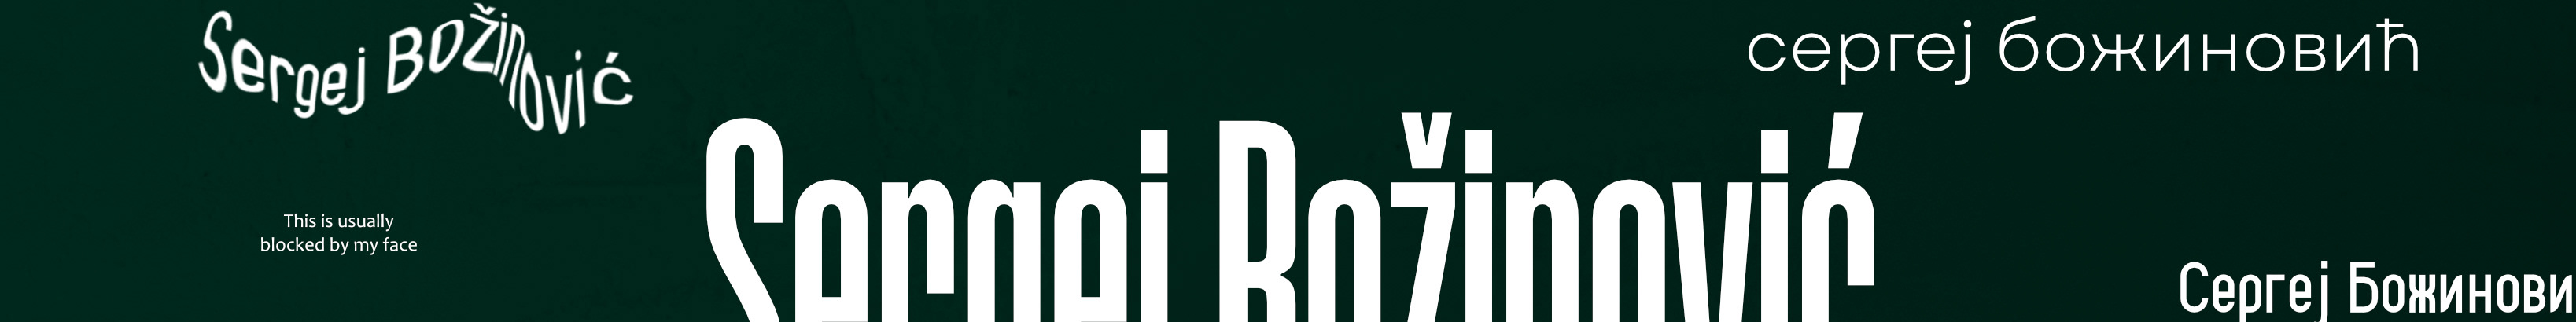 Sergej Božinović's profile banner